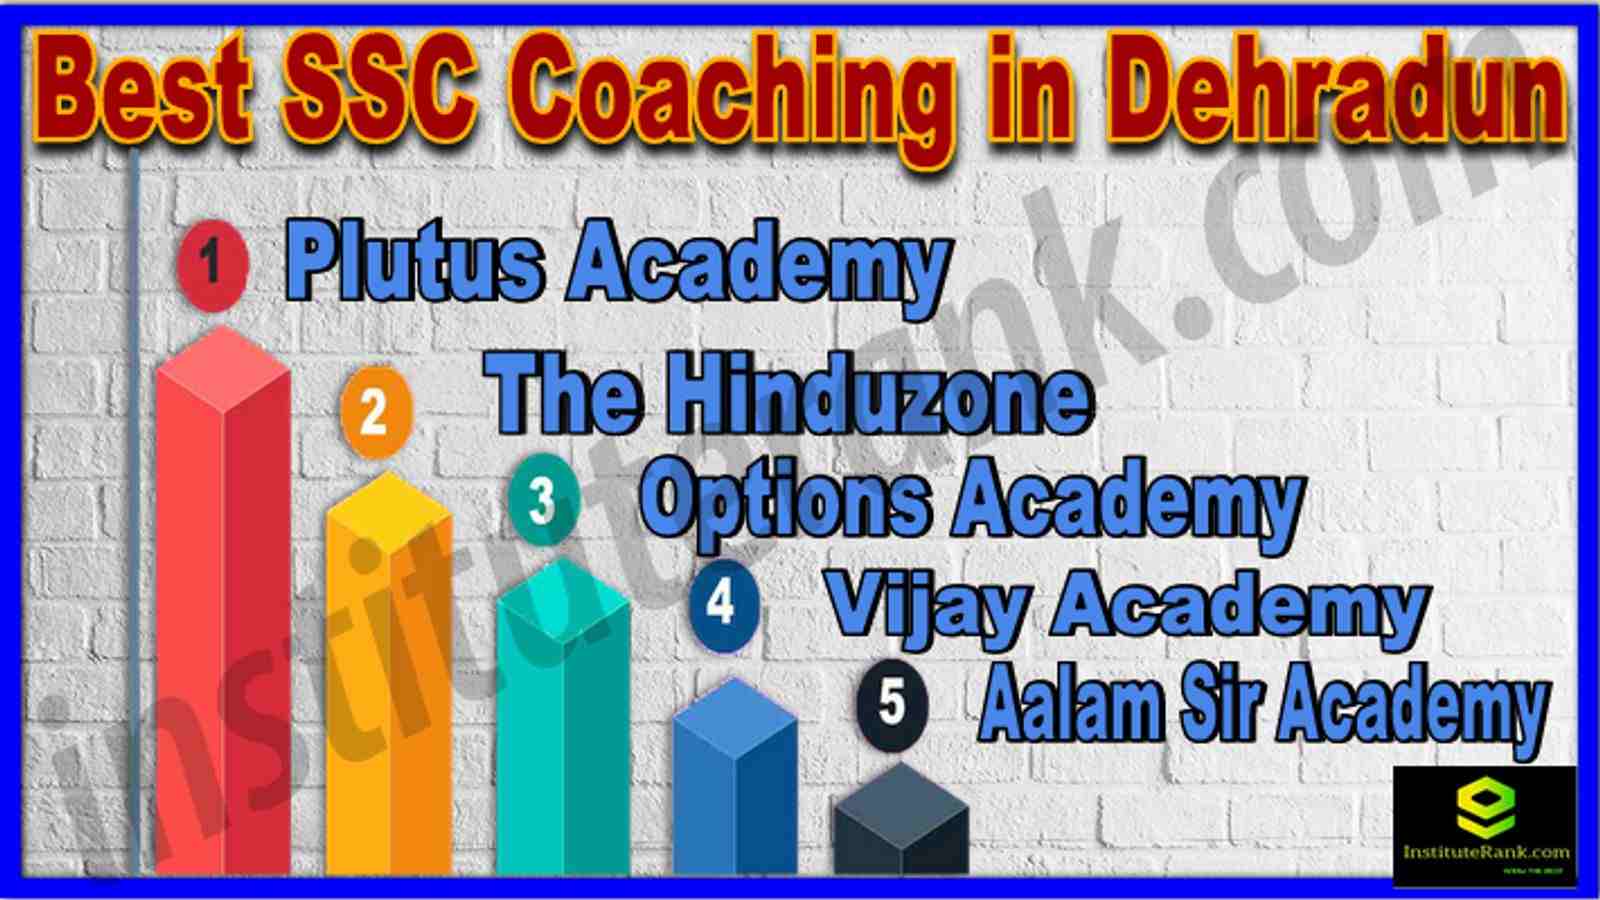 Best SSC Coaching in Dehradun